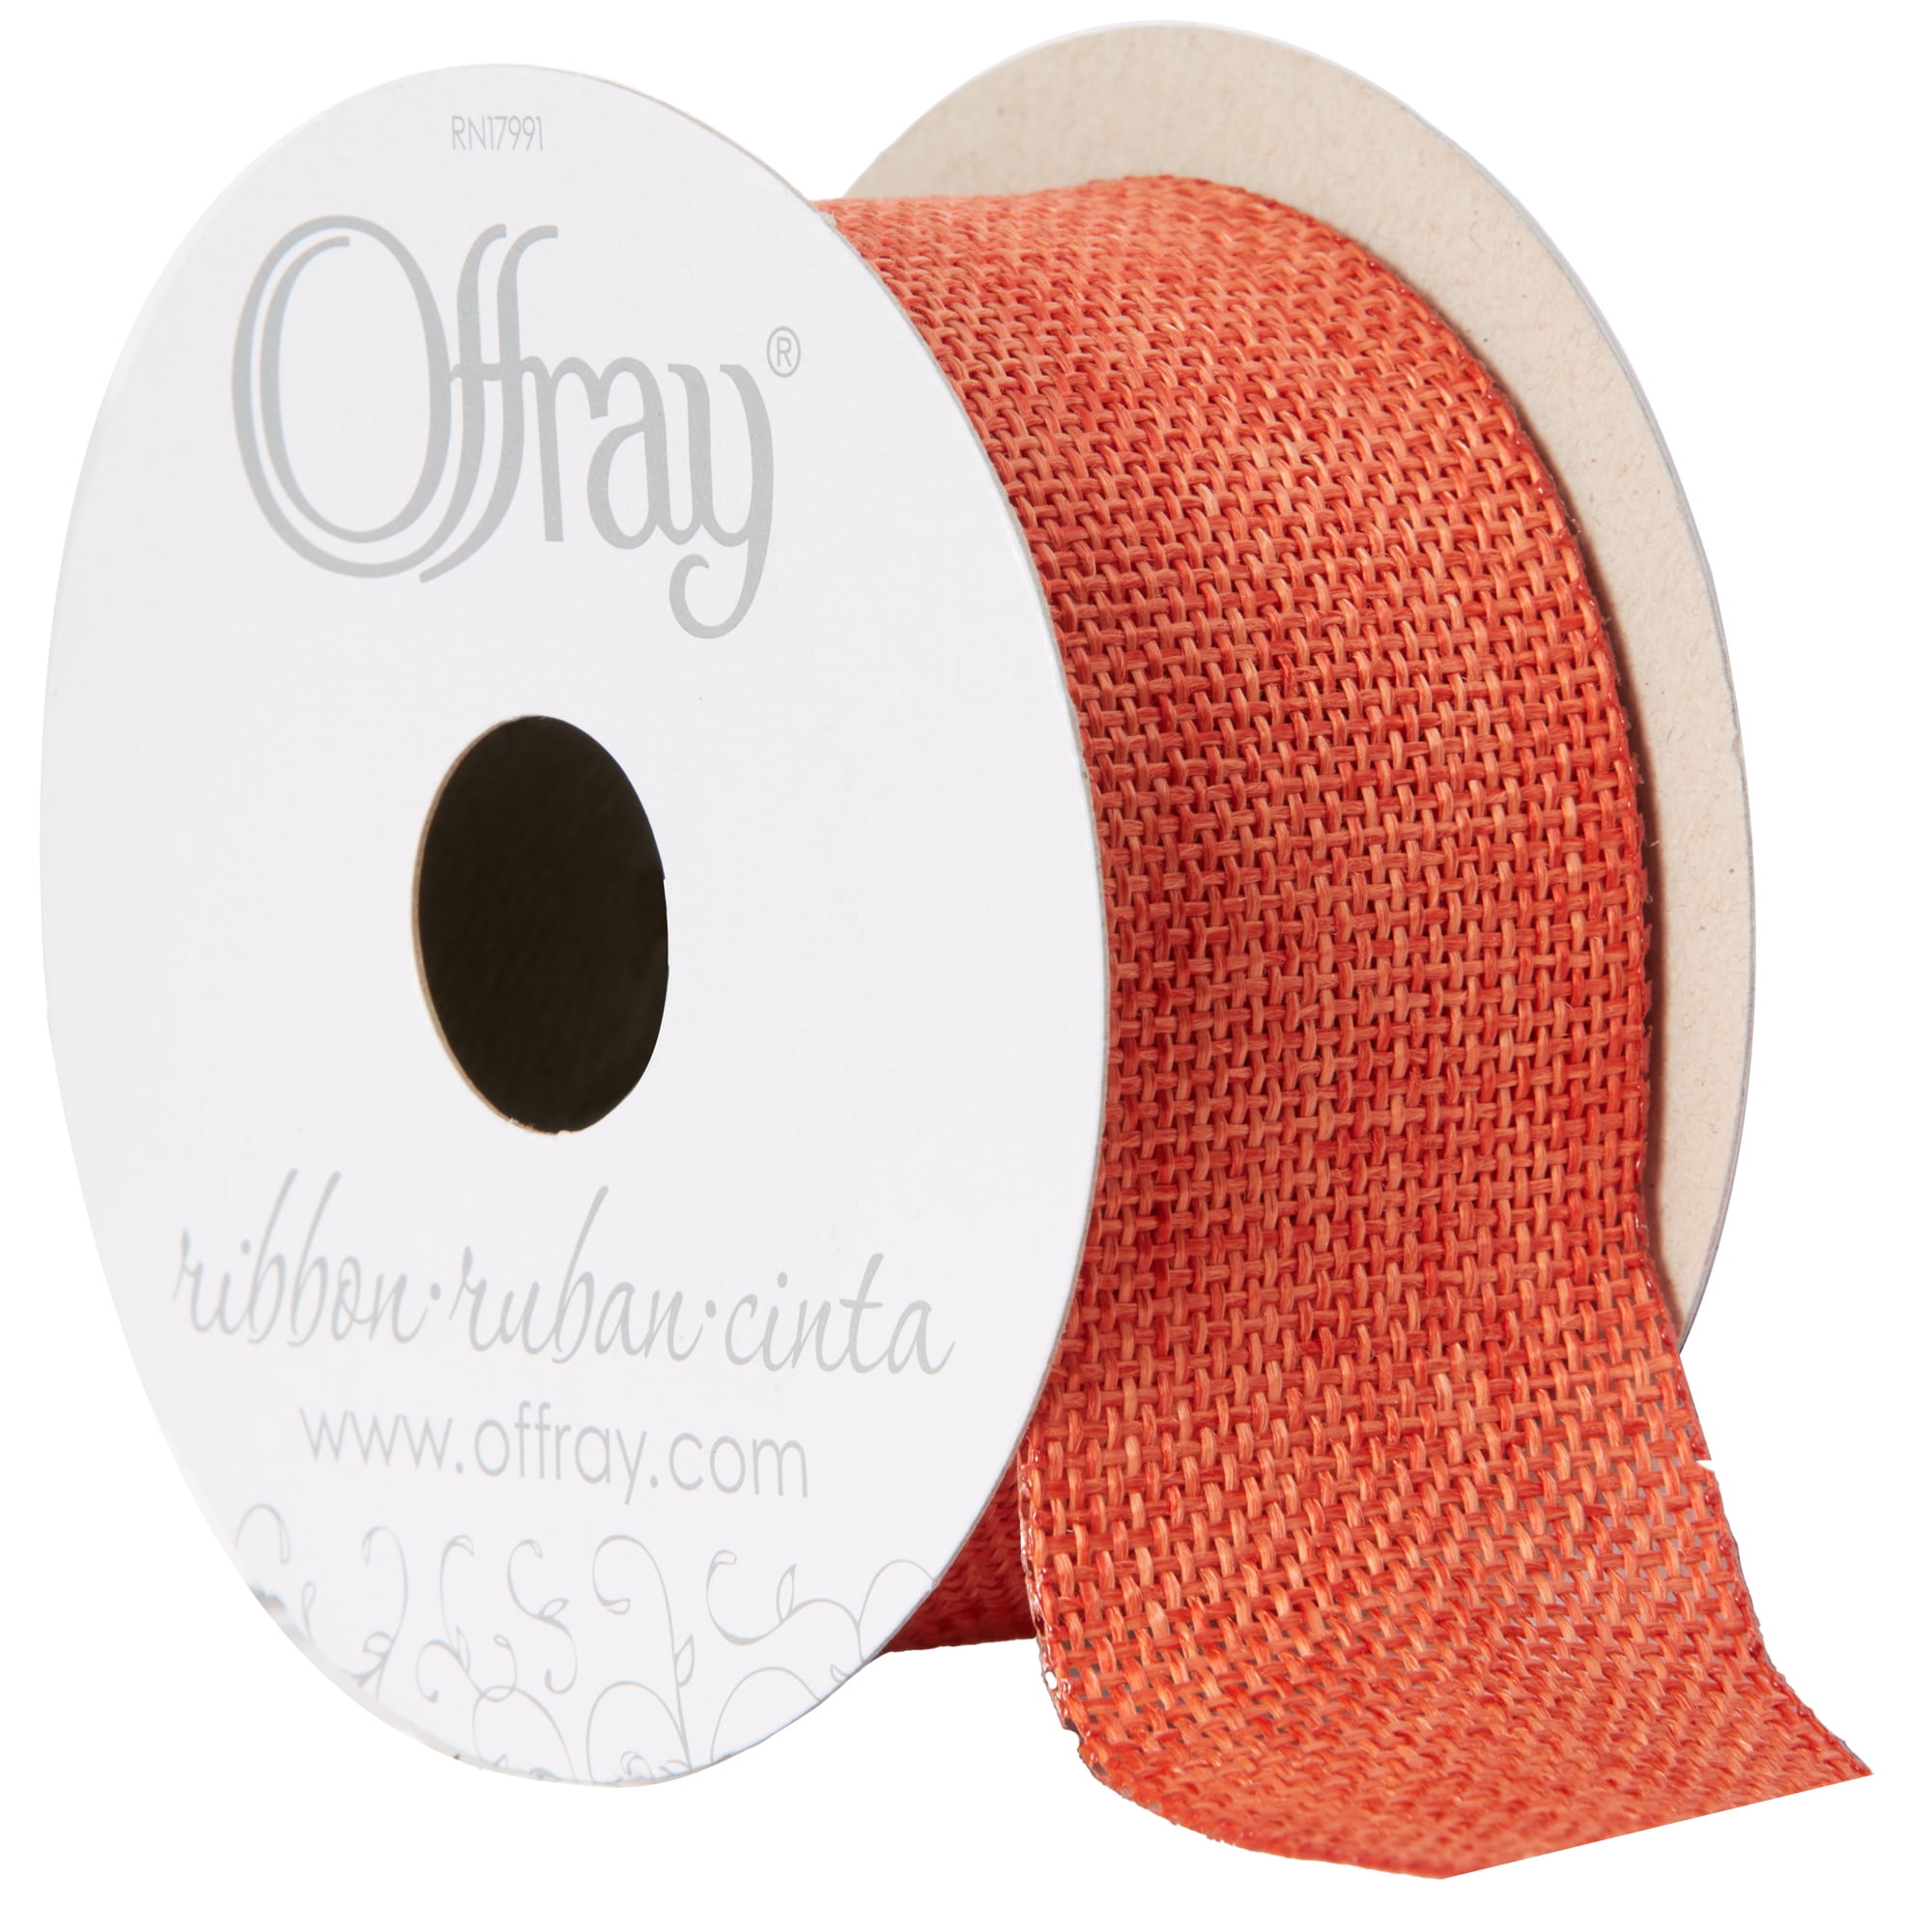 Offray Ribbon, Torrid Orange 1 1/2 inch Woven Burlap Woven Ribbon, 9 feet